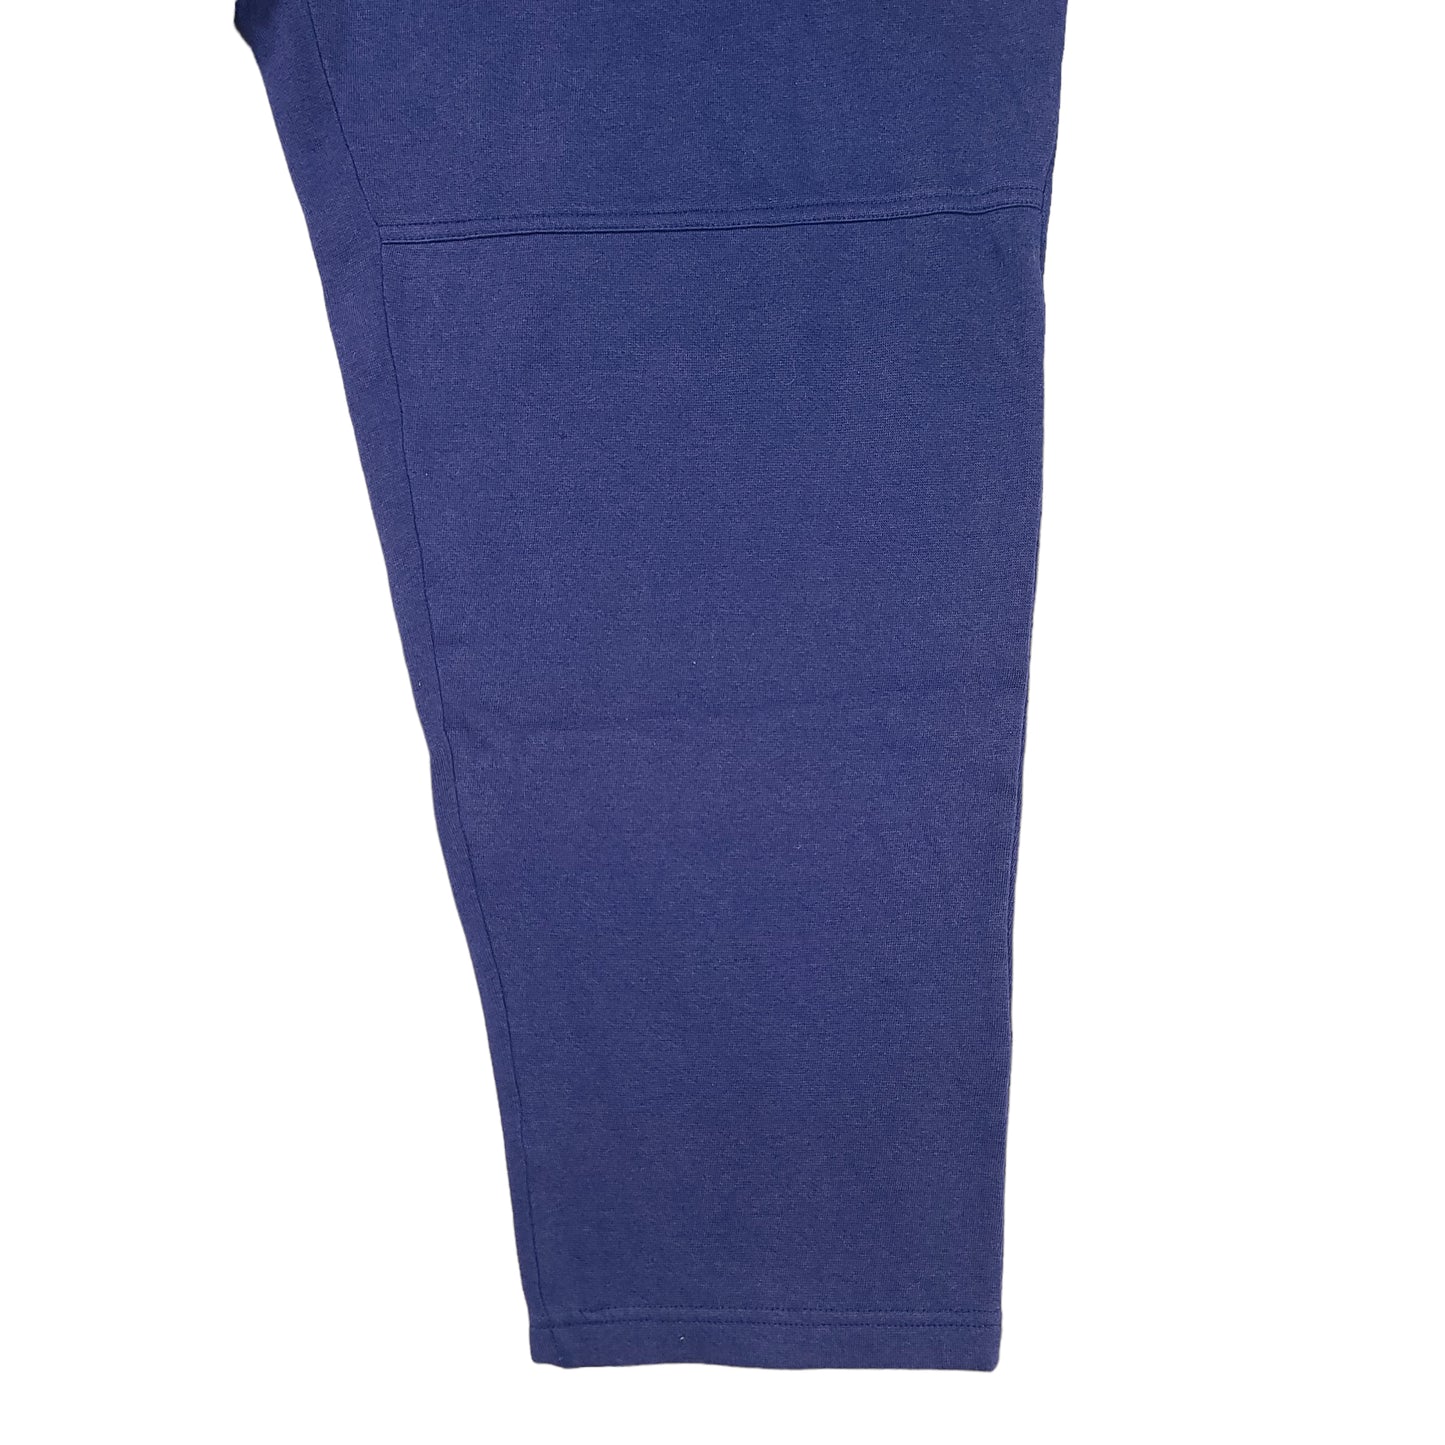 Nike Navy Blue Cotton Sweatpants